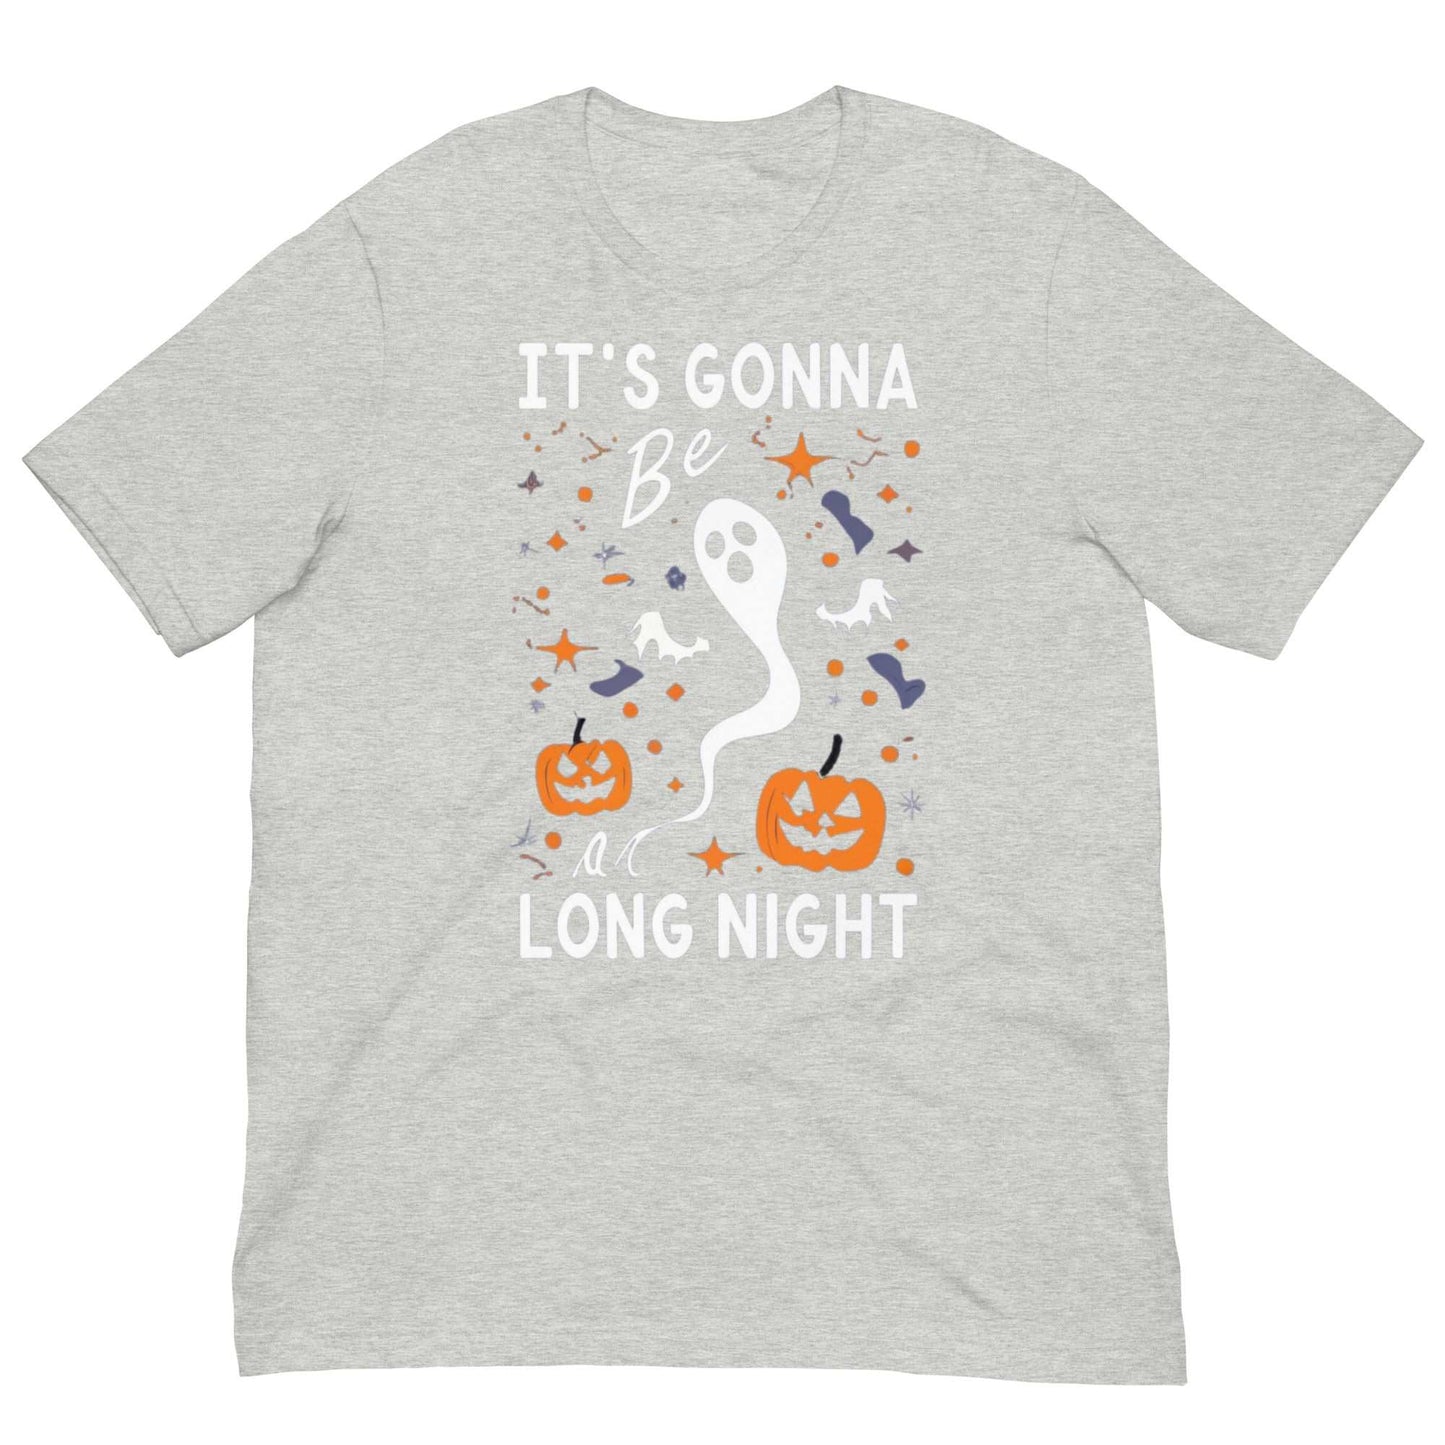 IT'S GONNA BE A LONG NIGHT - Unisex t-shirt